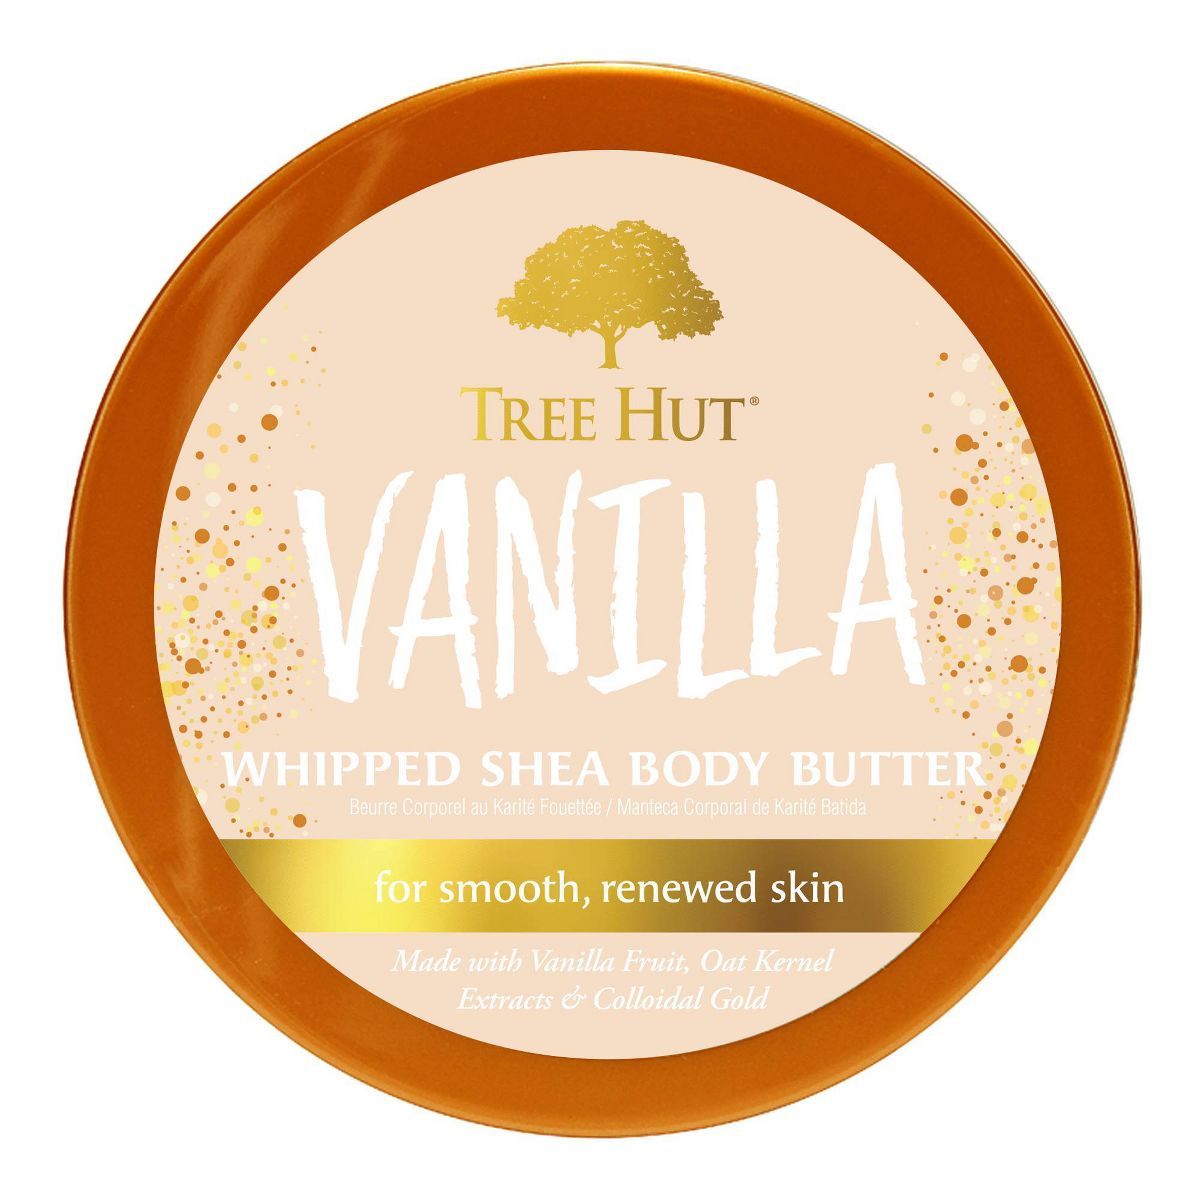 Tree Hut Vanilla Whipped Shea Body Butter Jasmine & Vanilla - 8.4oz | Target